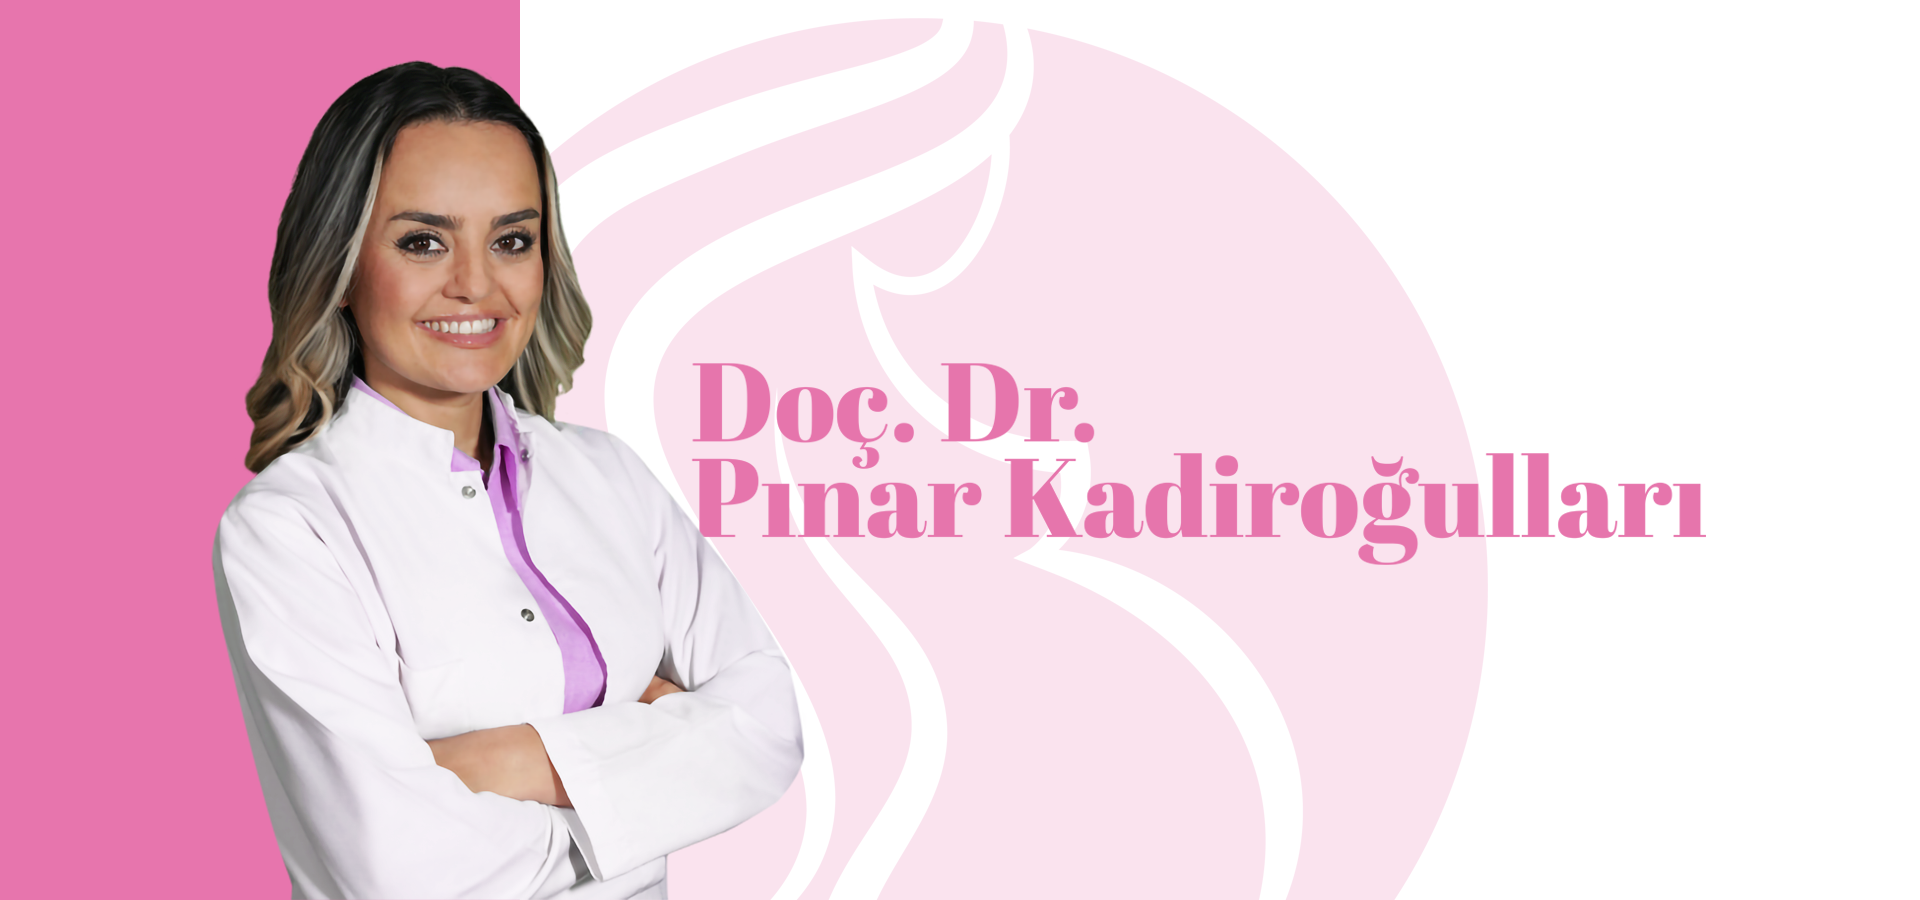 Assoc. Dr. Pınar Kadiroğulları
Gynecology and Obstetrics Specialist